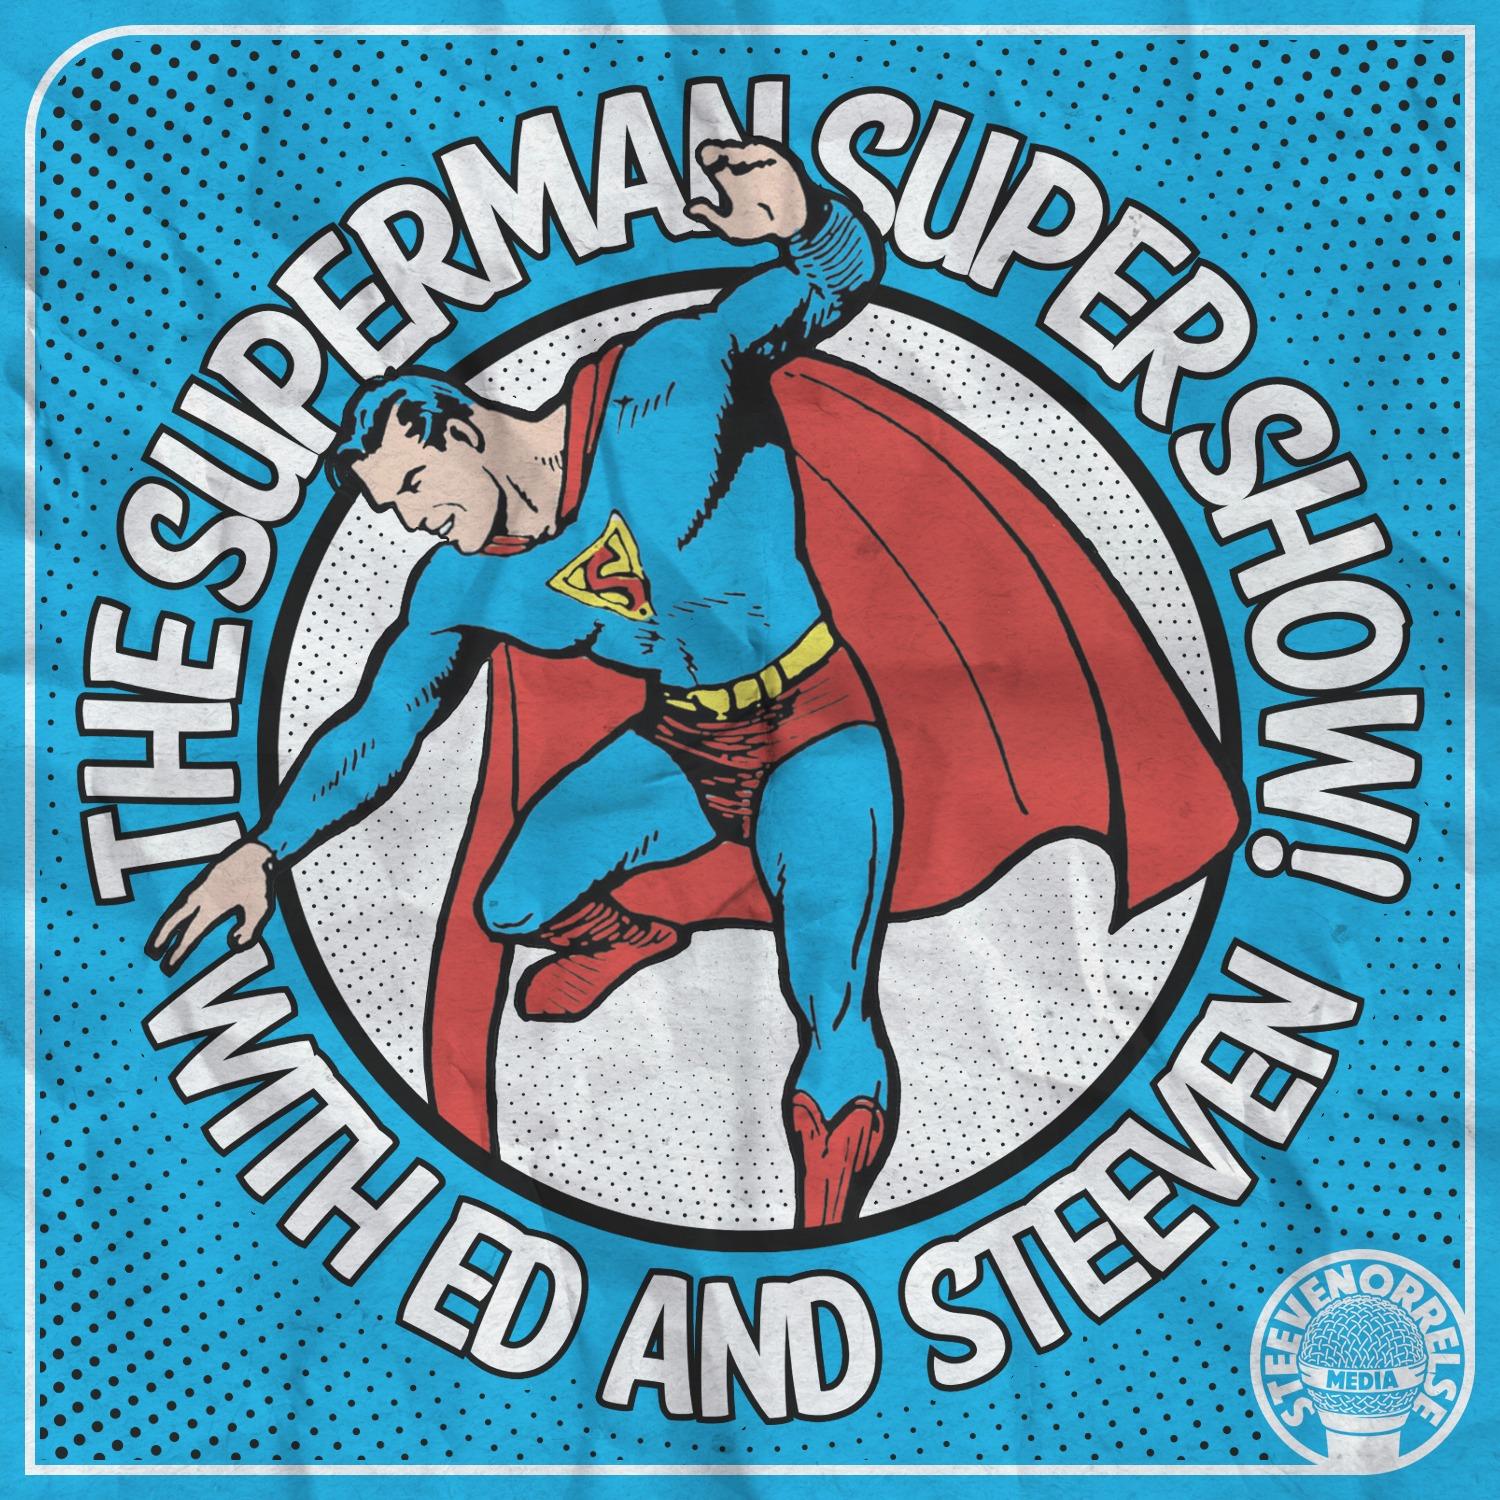 The Superman Super Show!